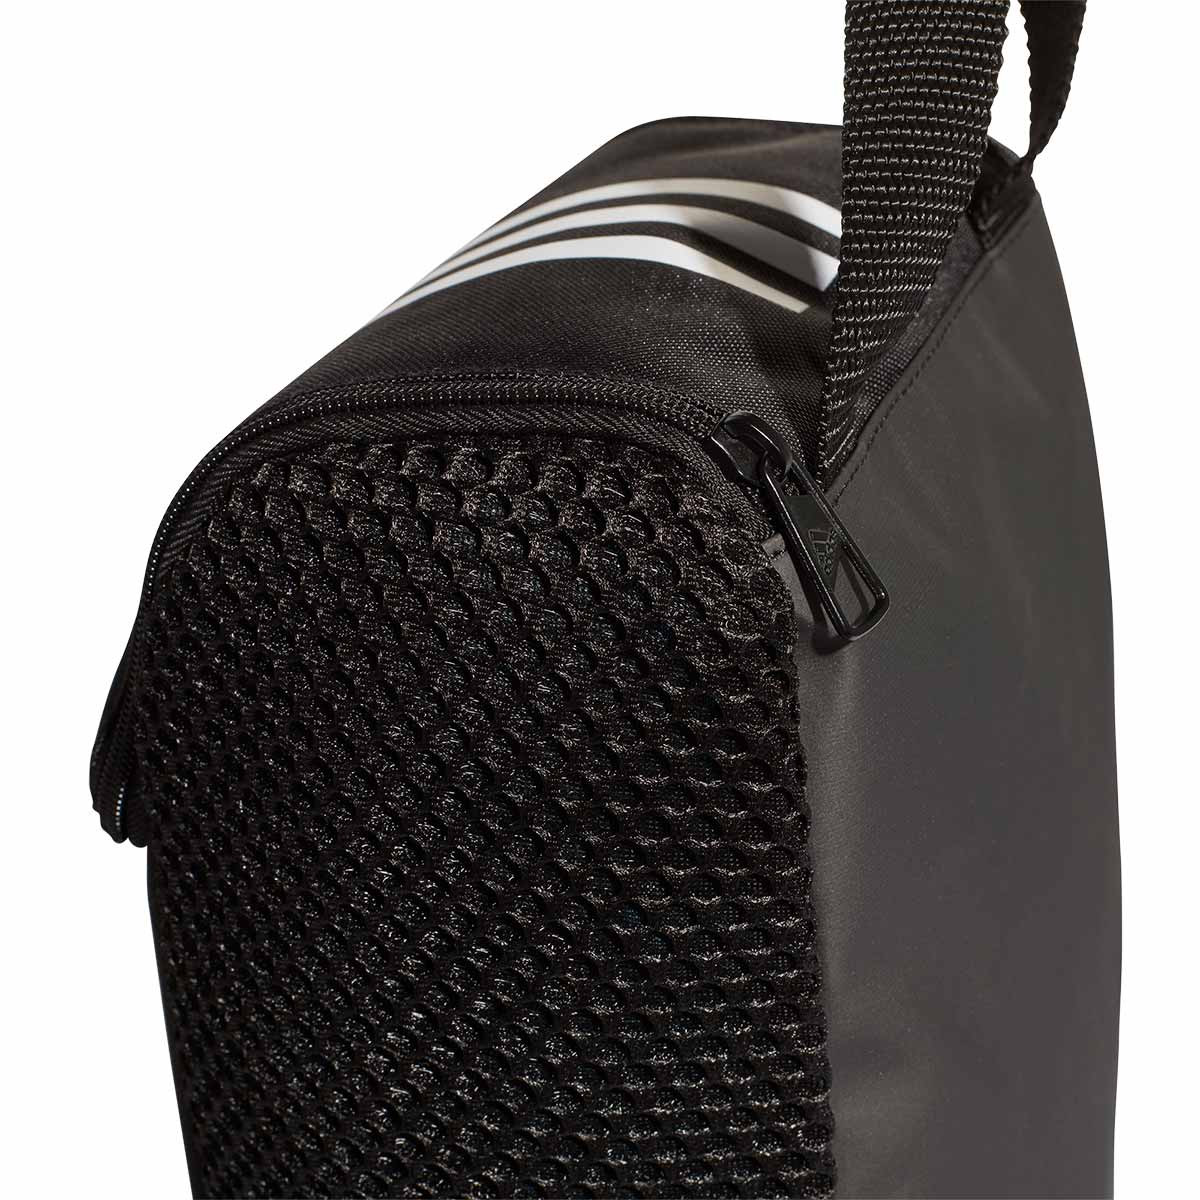 Boot bag adidas Tiro Black-White 